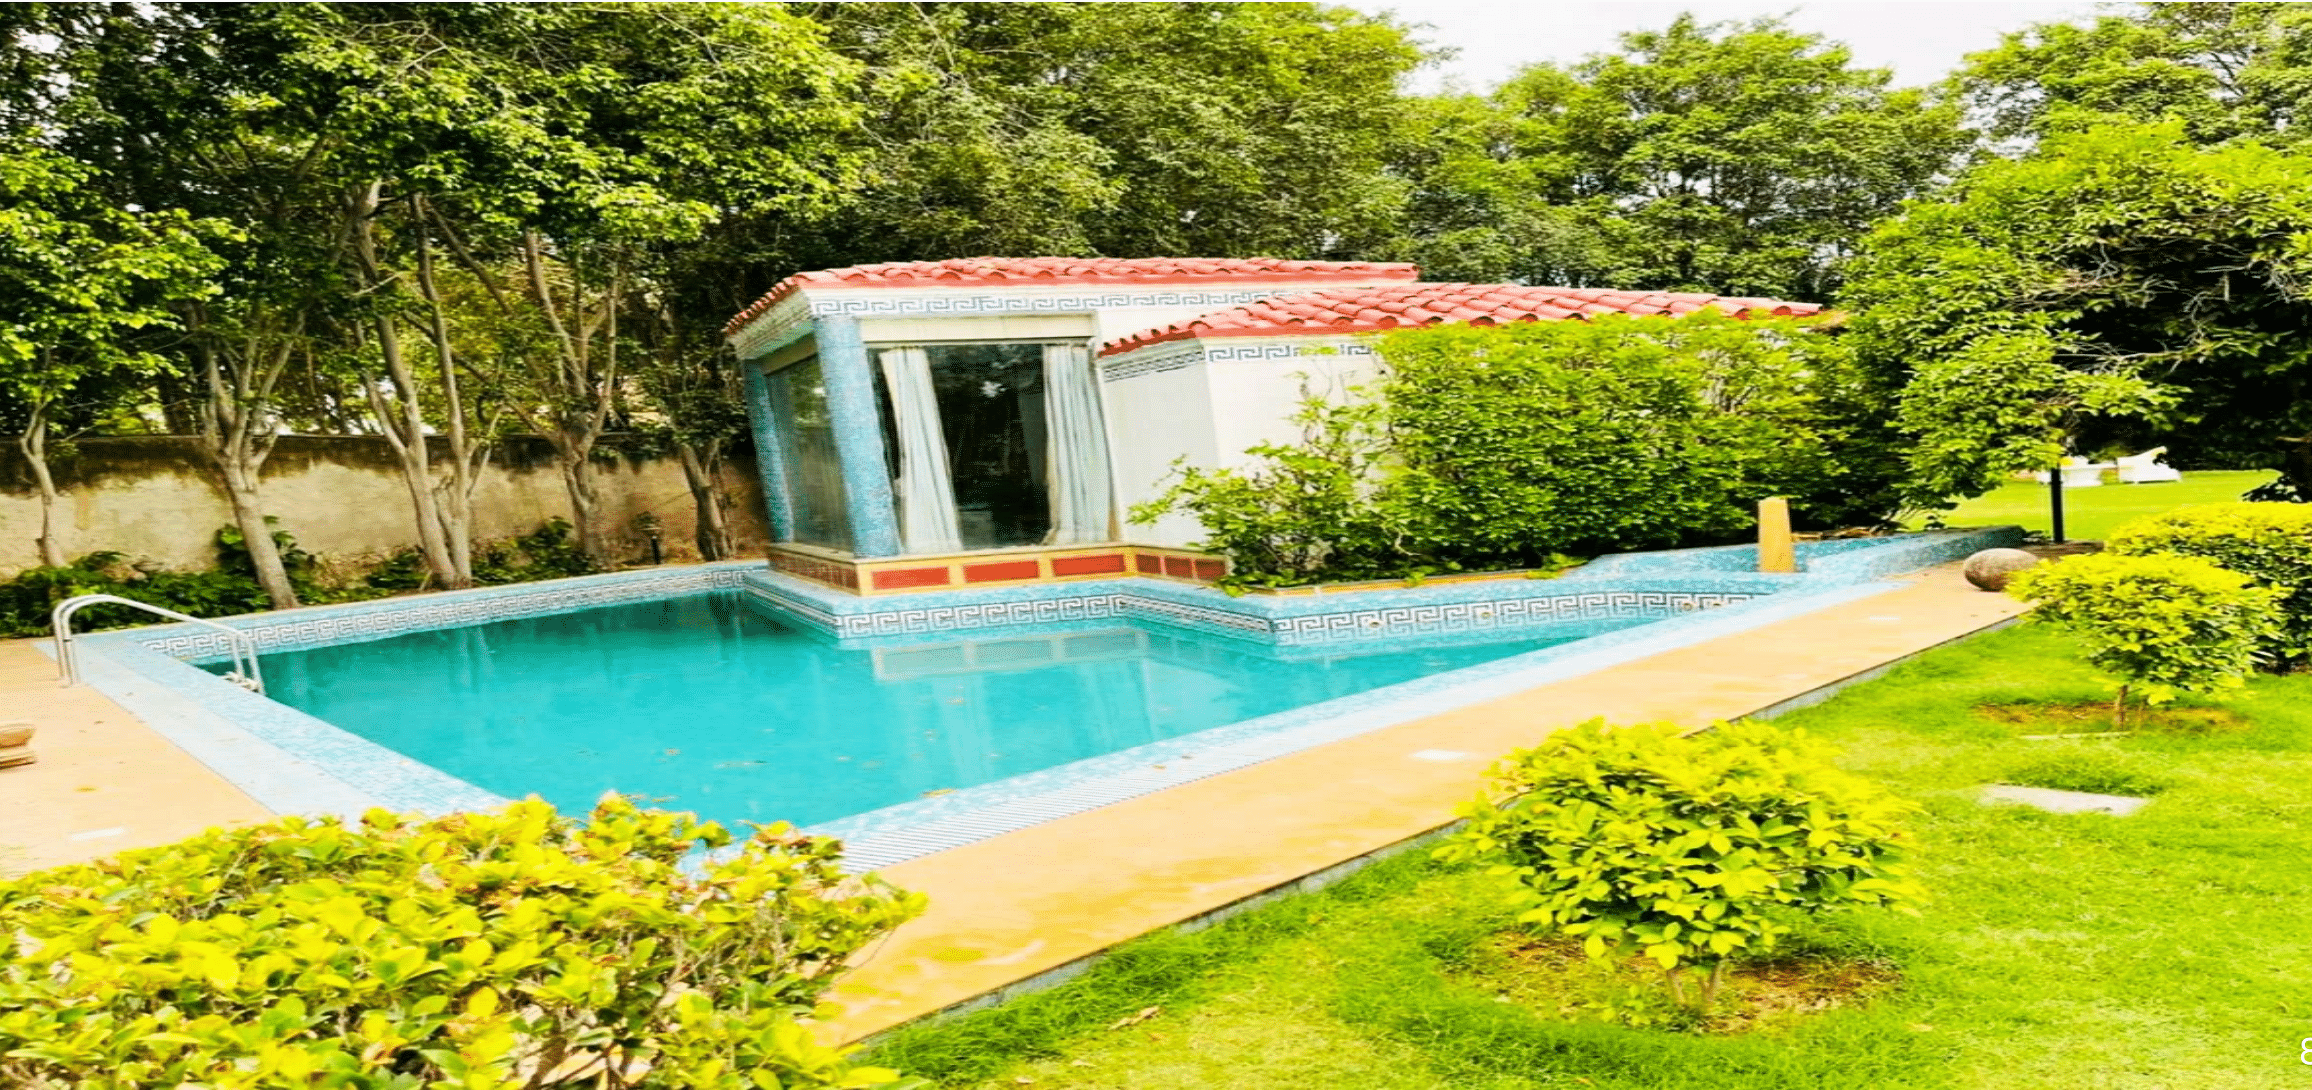 Vintage The Green in Chattarpur, Gurgaon